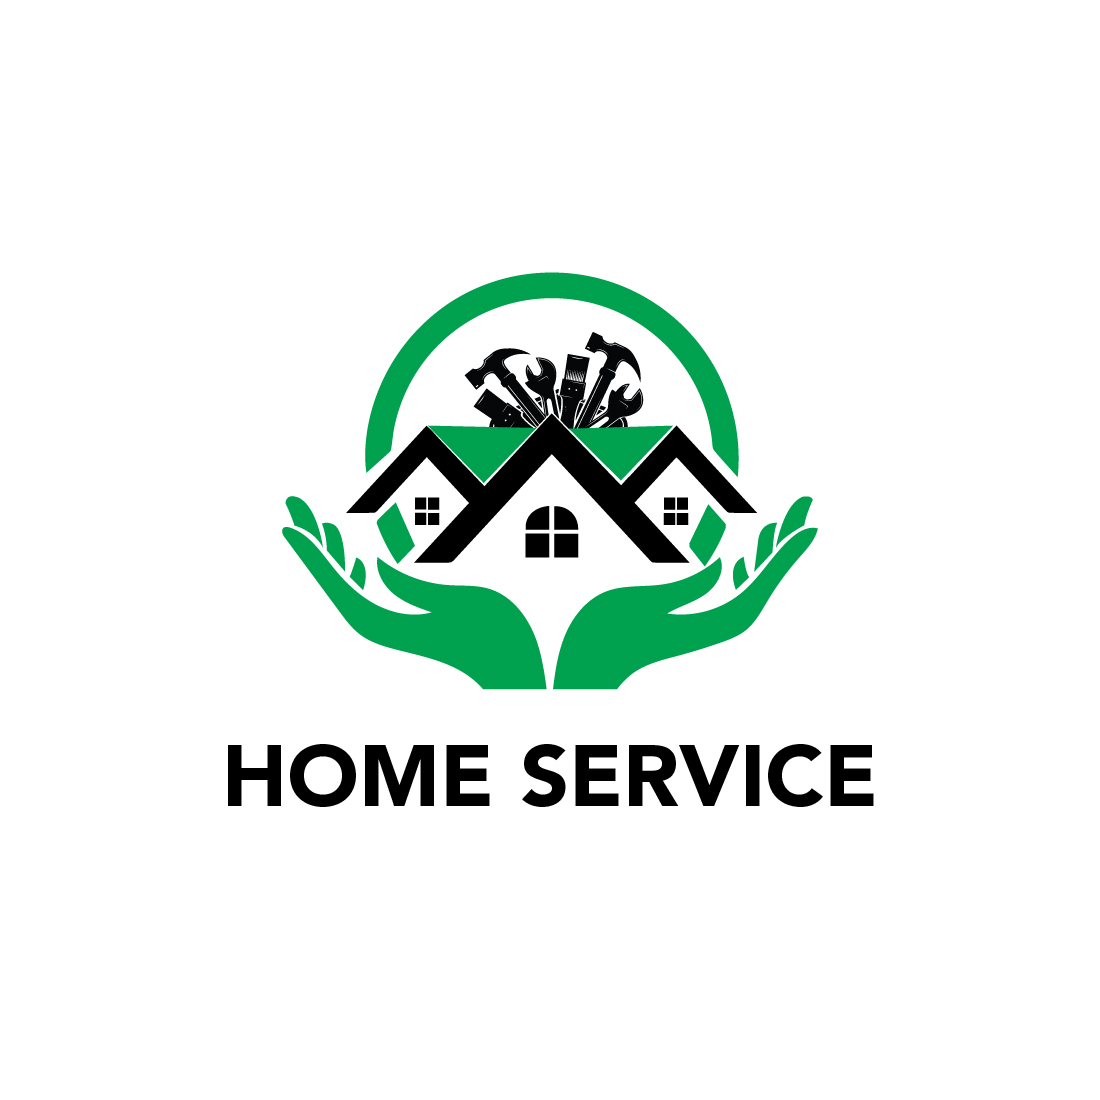 Home service logo cover image.